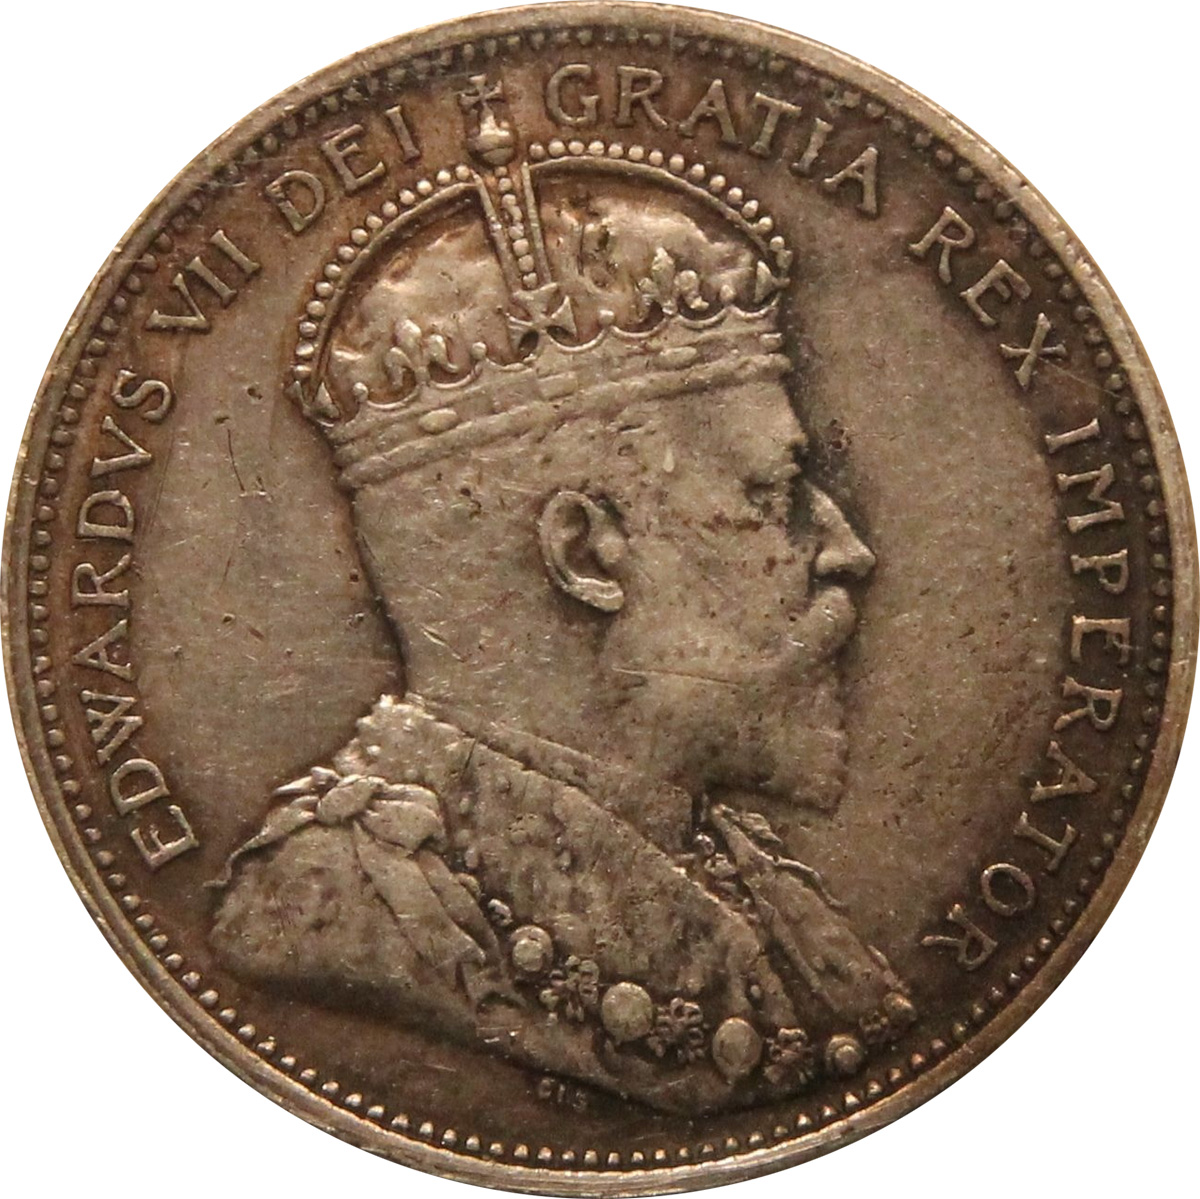 EF-40 - 25 cents 1902 to 1910 - Edward VII